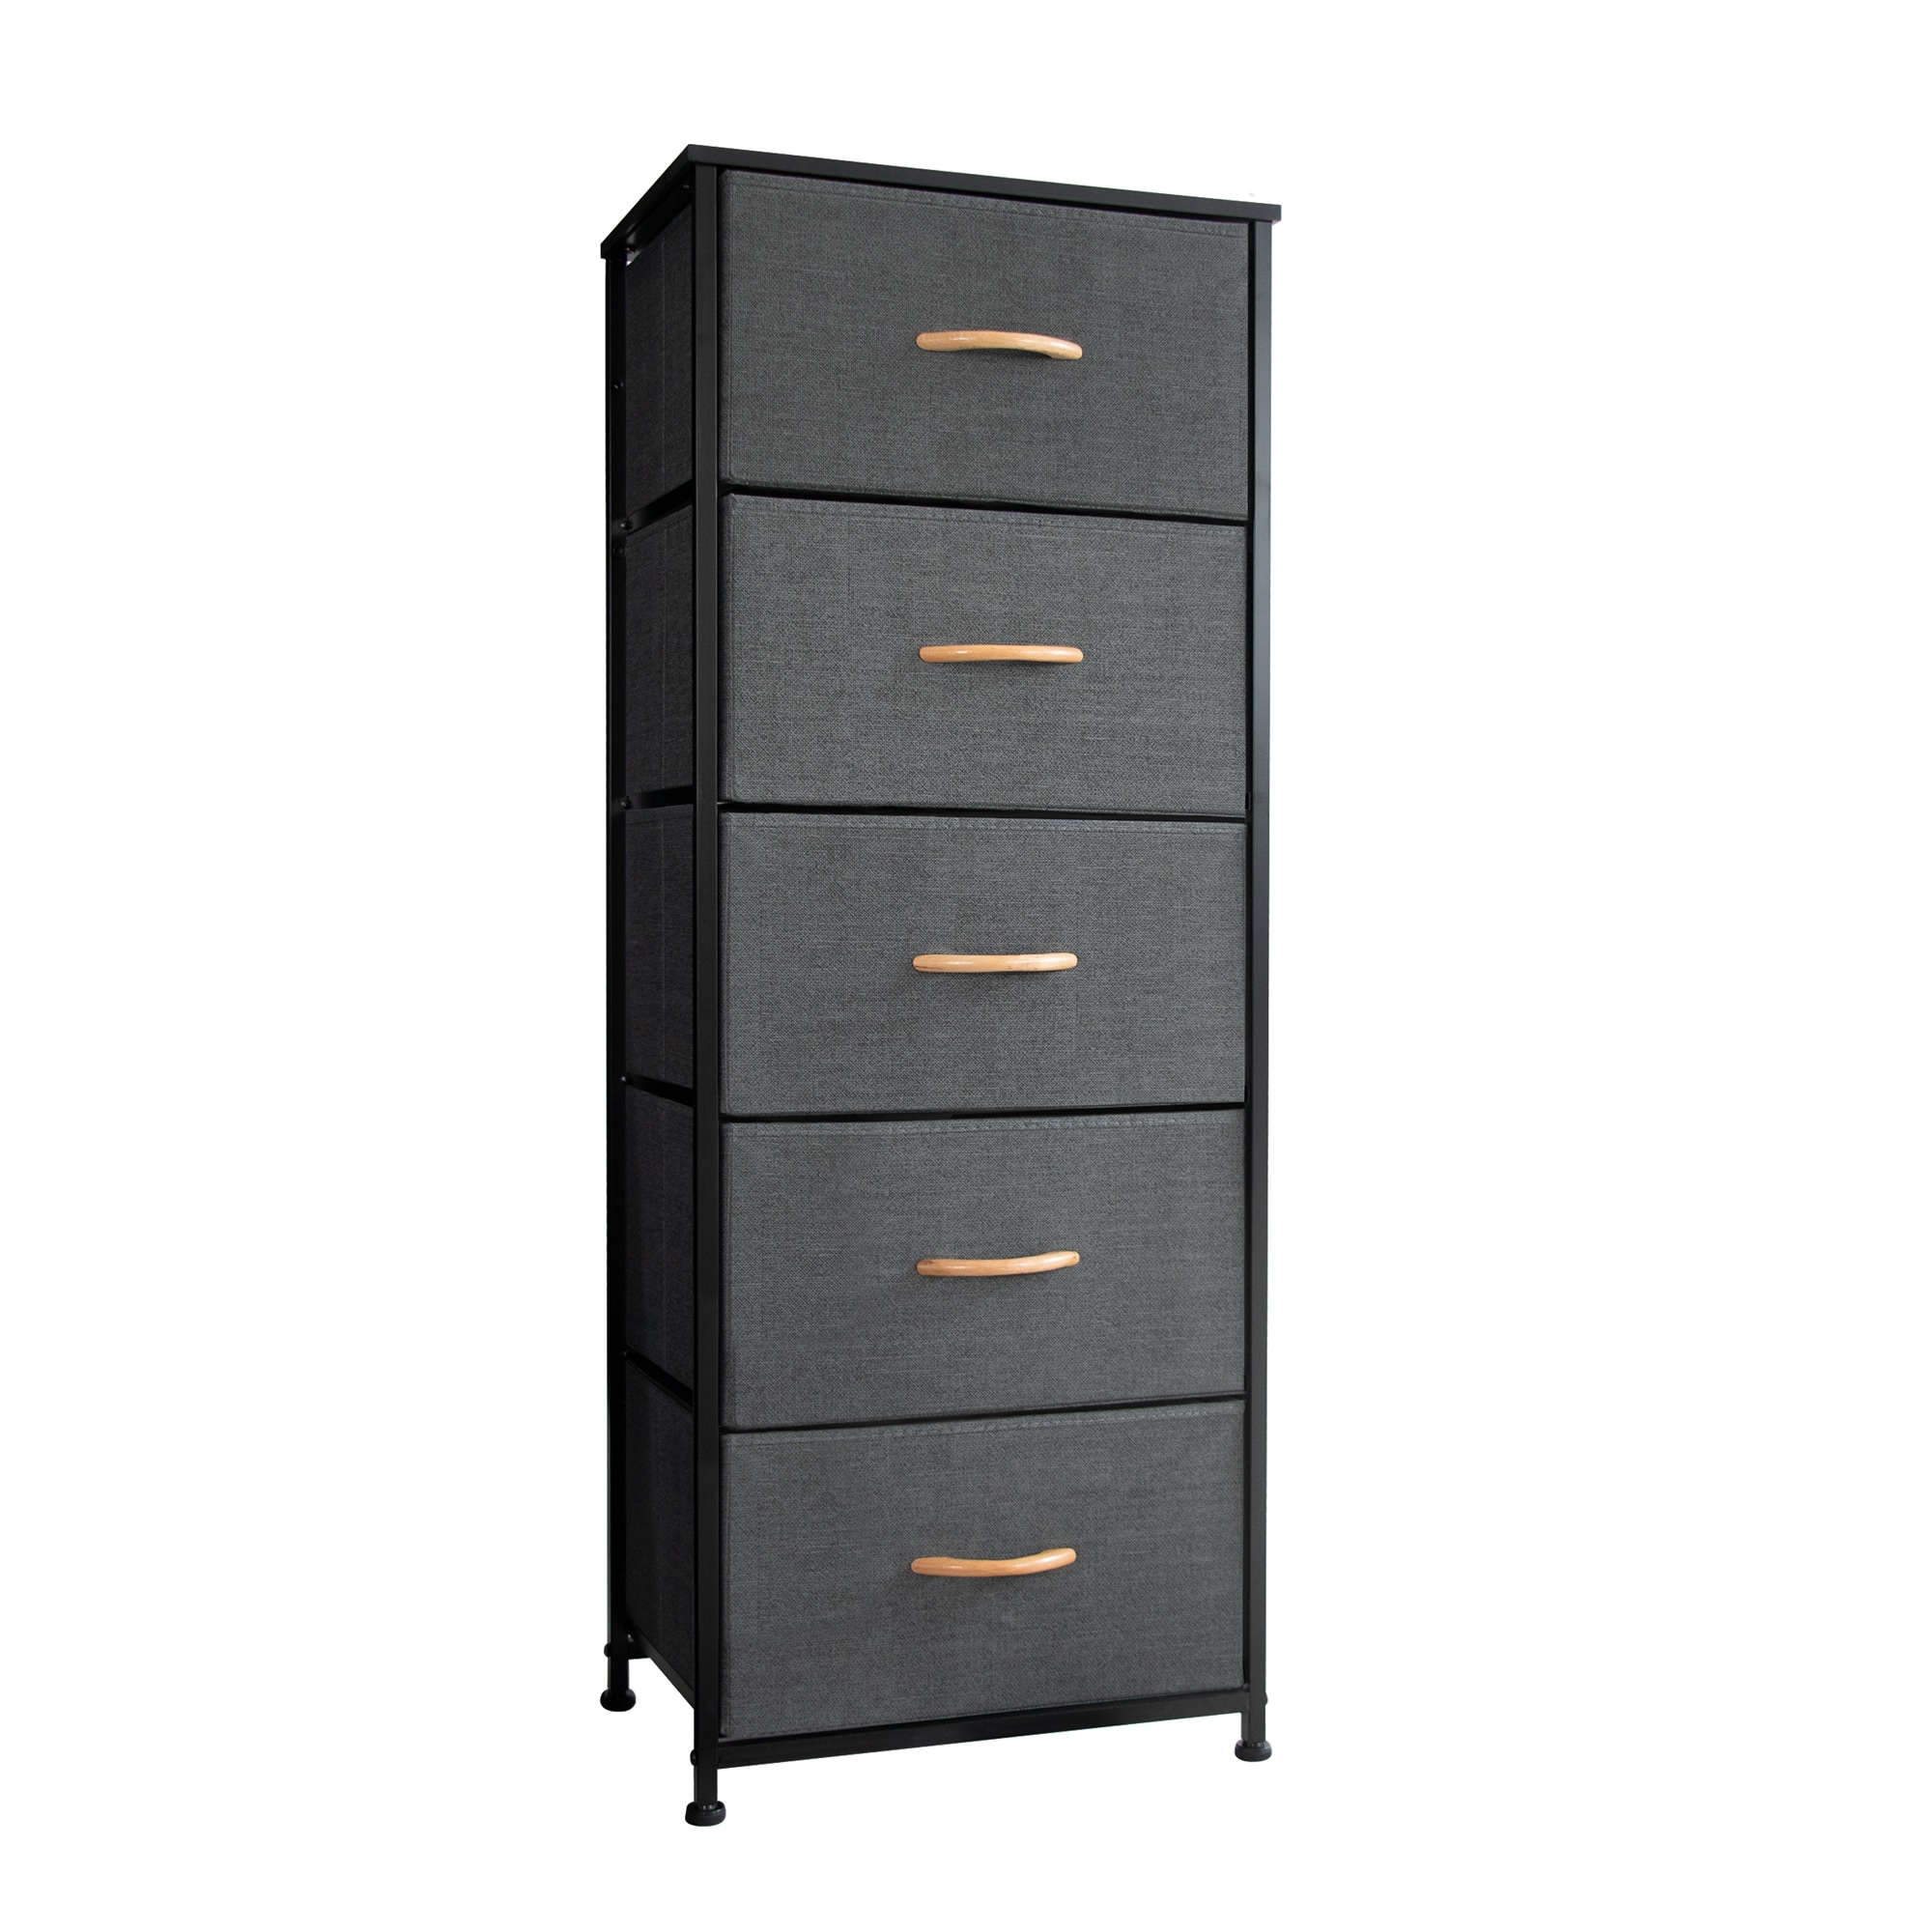 7 Drawers Dresser, Vertical Storage Tower with Shelves, Fabric Bins,  Versatile Cabinet, Organizer Unit